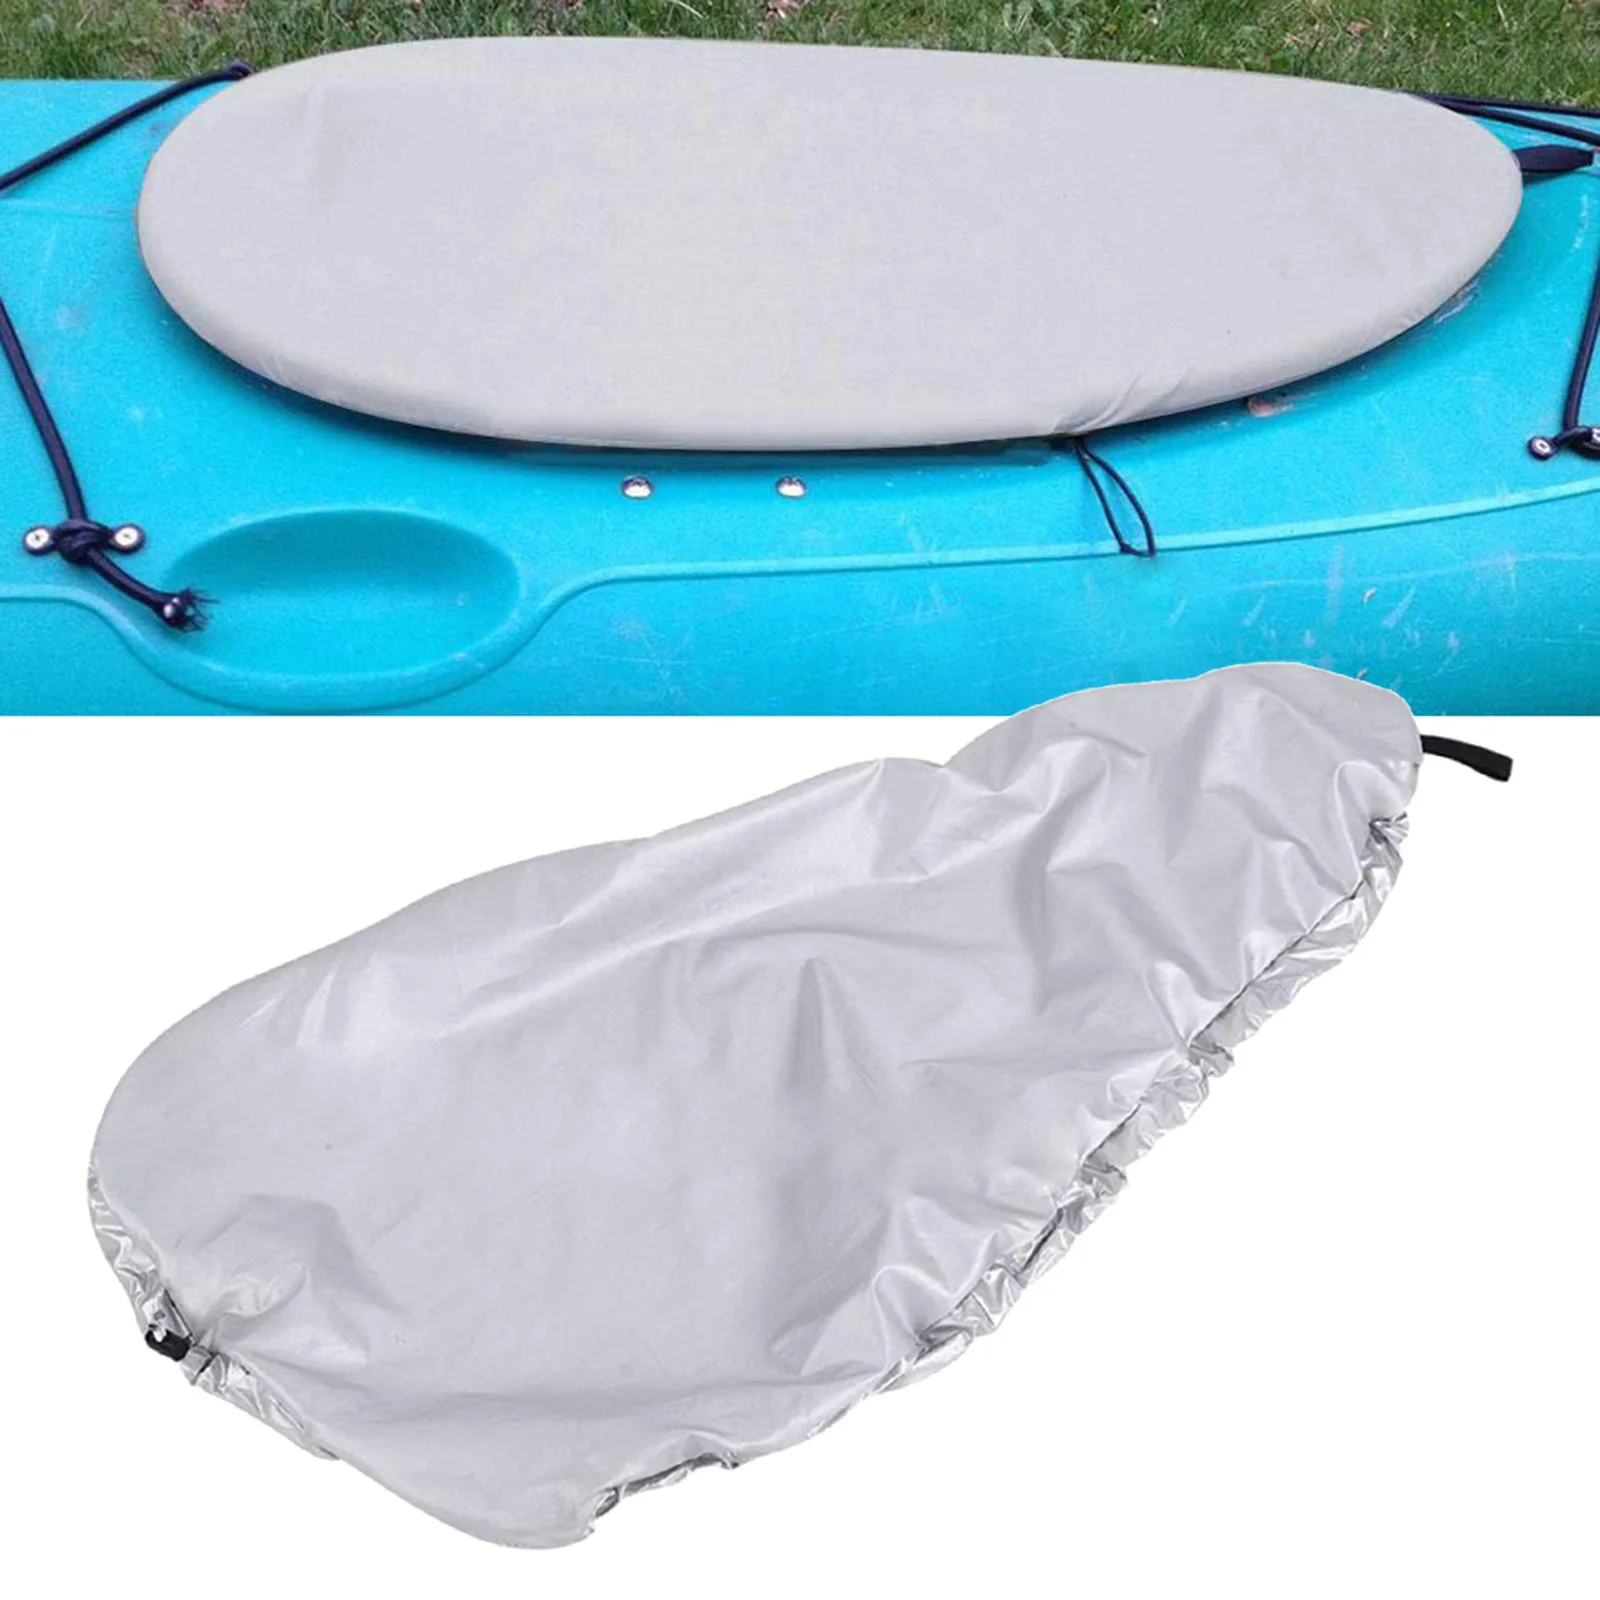 Premium Kayak Cockpit Cover Waterproof Shield Adjustable Wear-resistant Canoe Sprayskirt Seal Protector Indoor Accessories